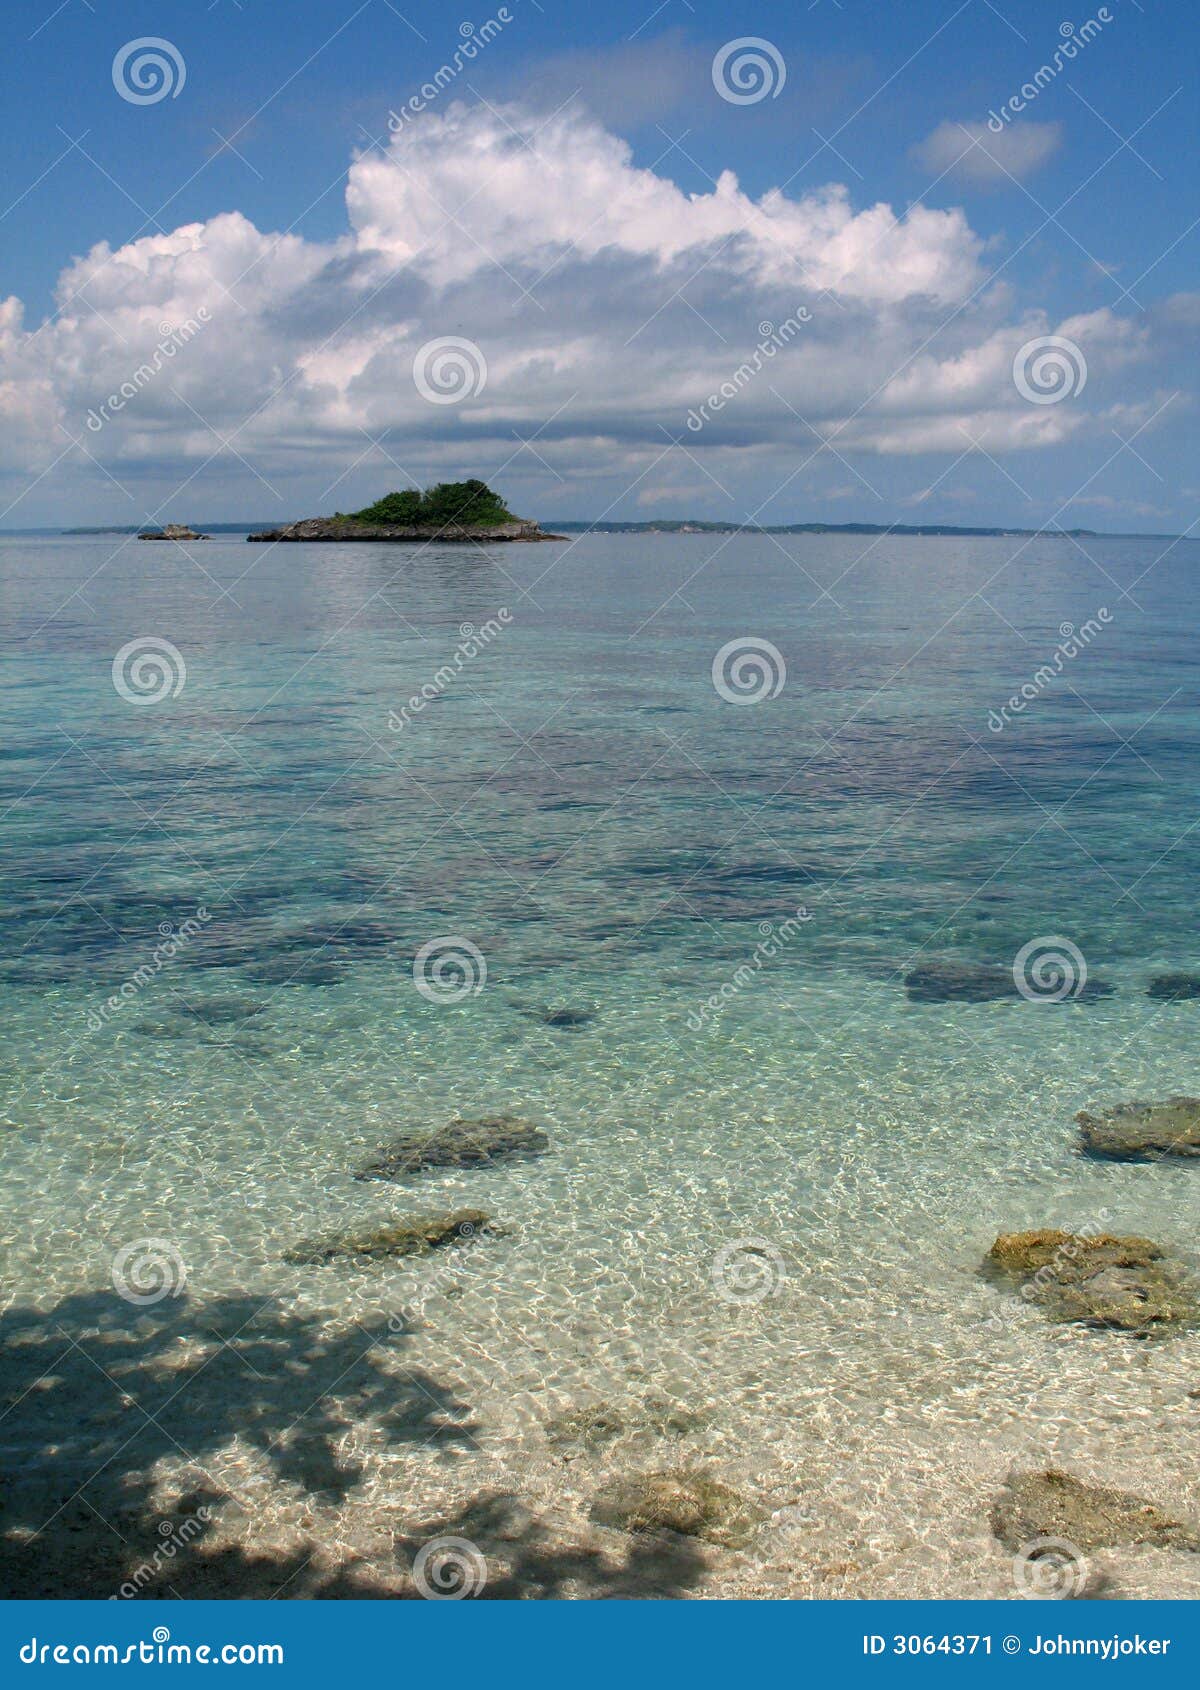 islet near malapascua, phils